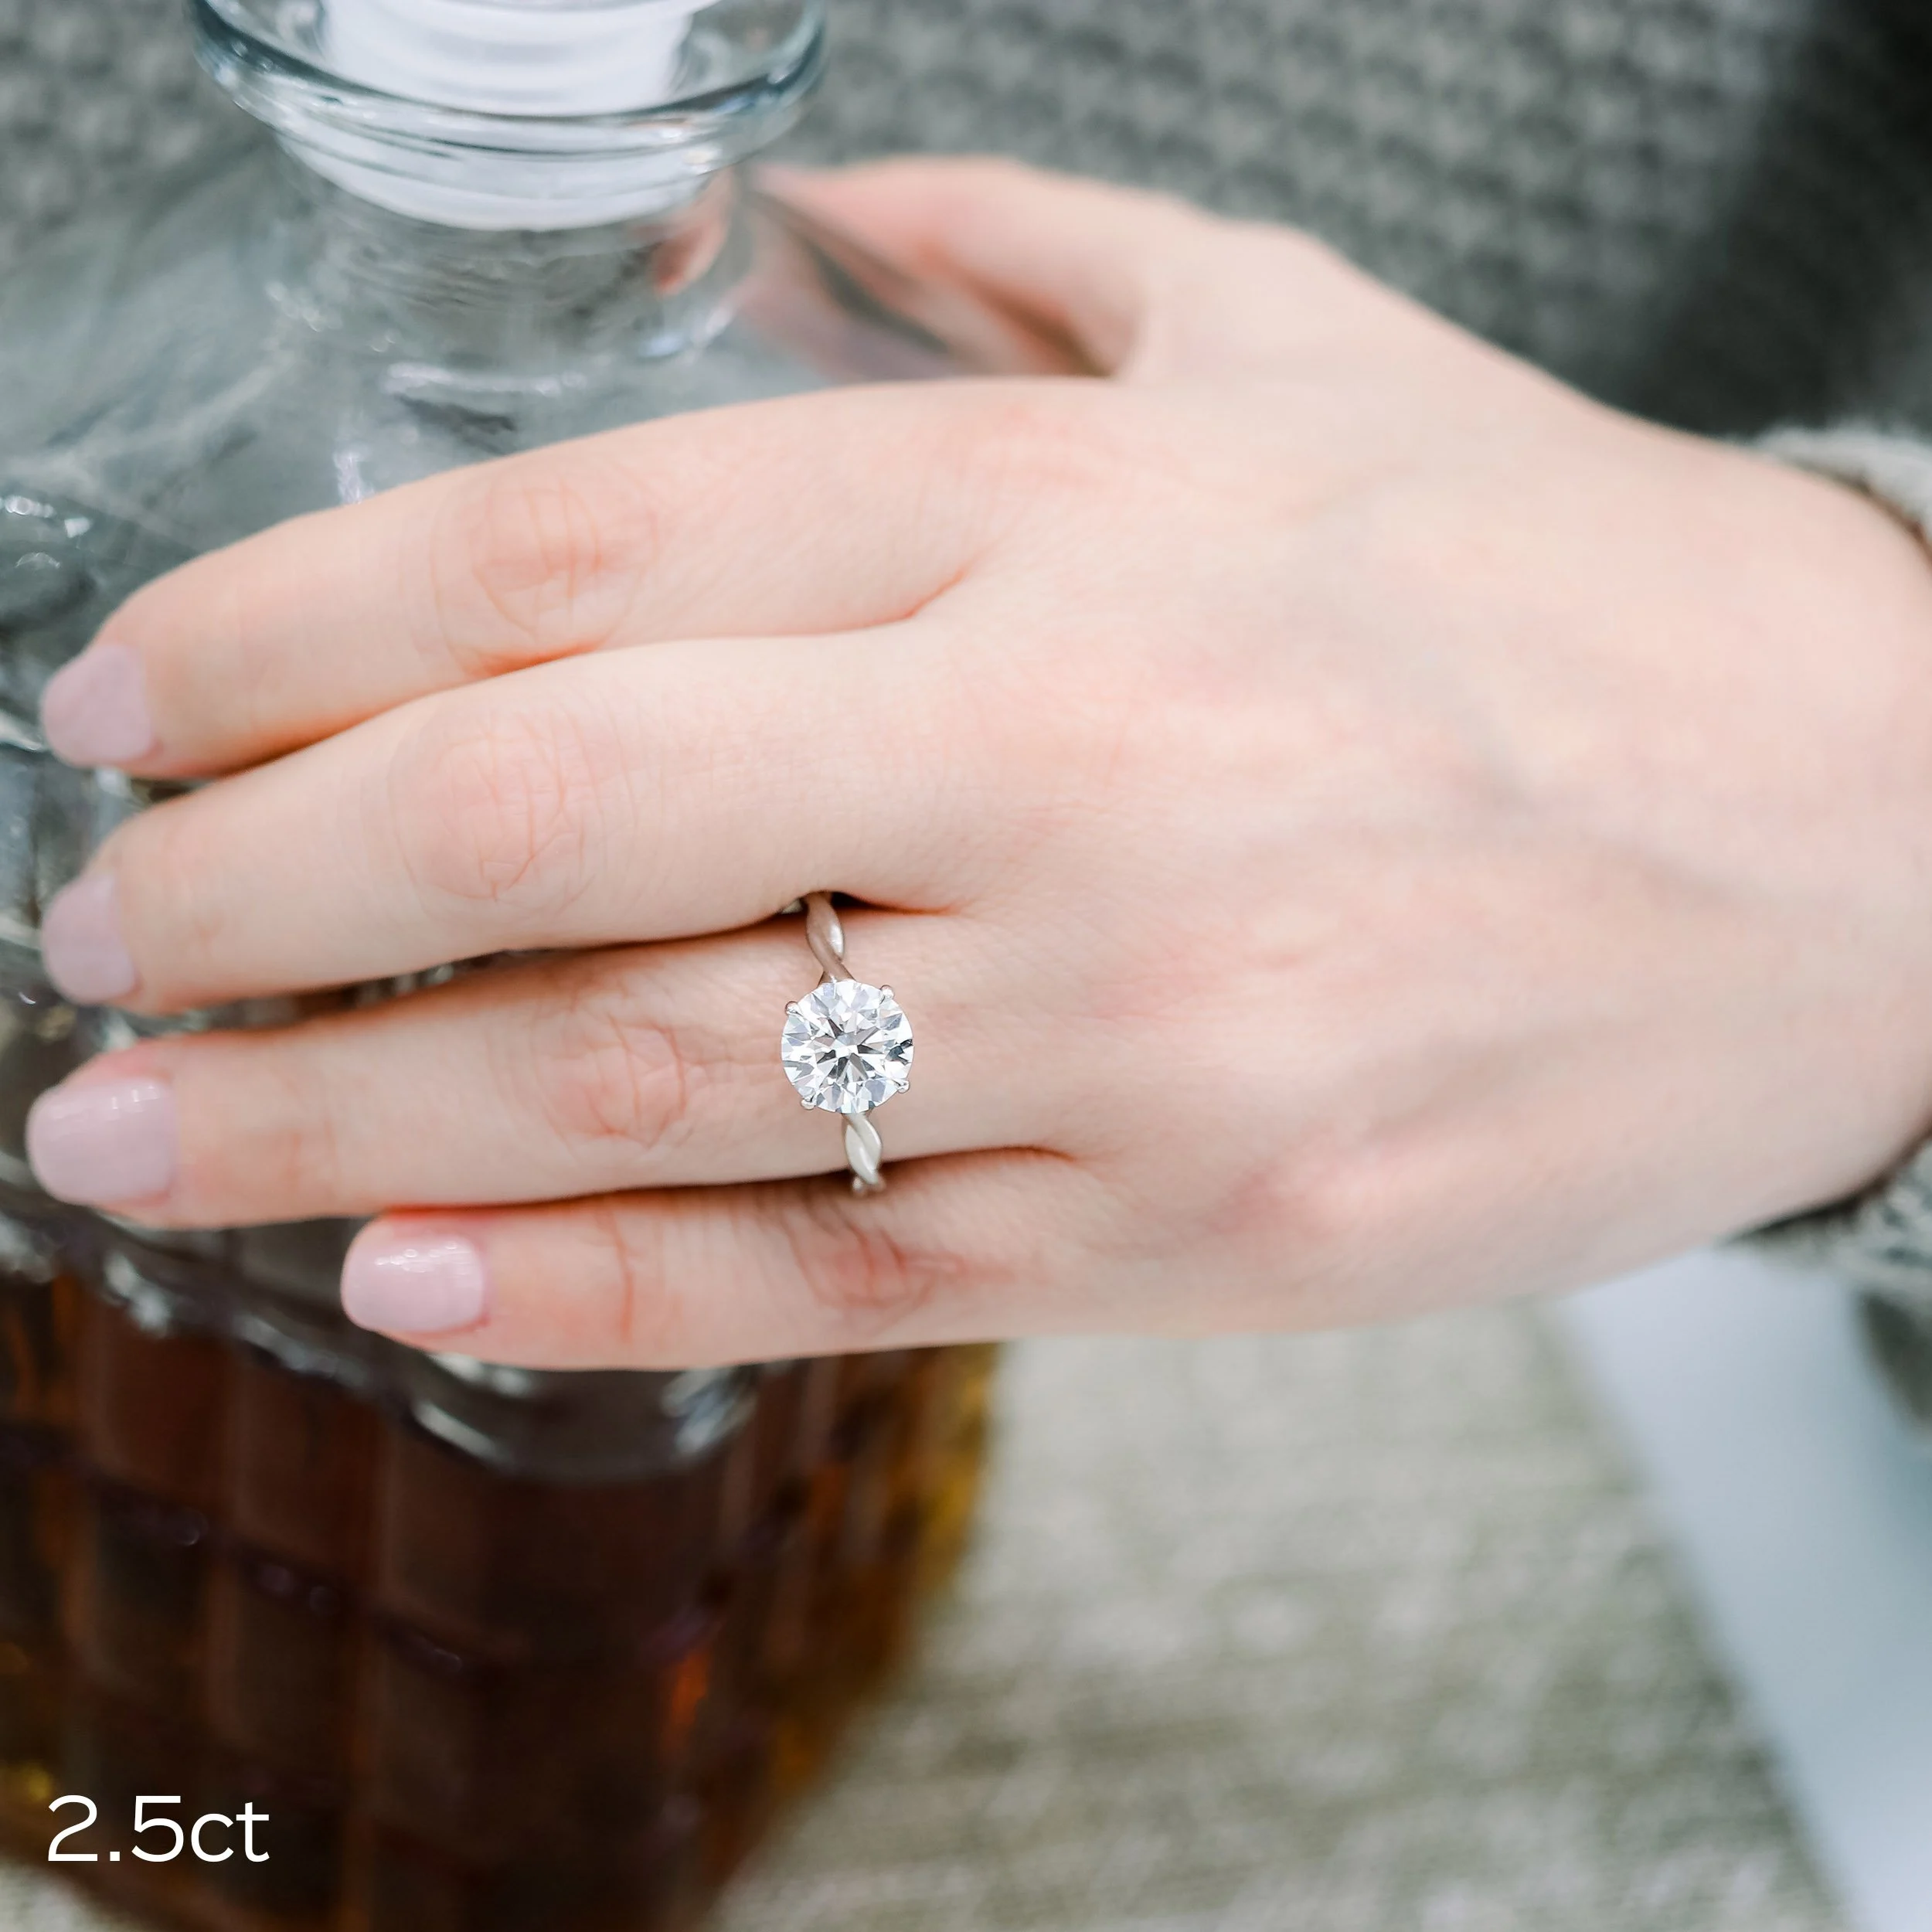 2.5 Carat Lab Diamonds set in Platinum Twisting Band Solitaire Diamond Engagement Ring (Main View)